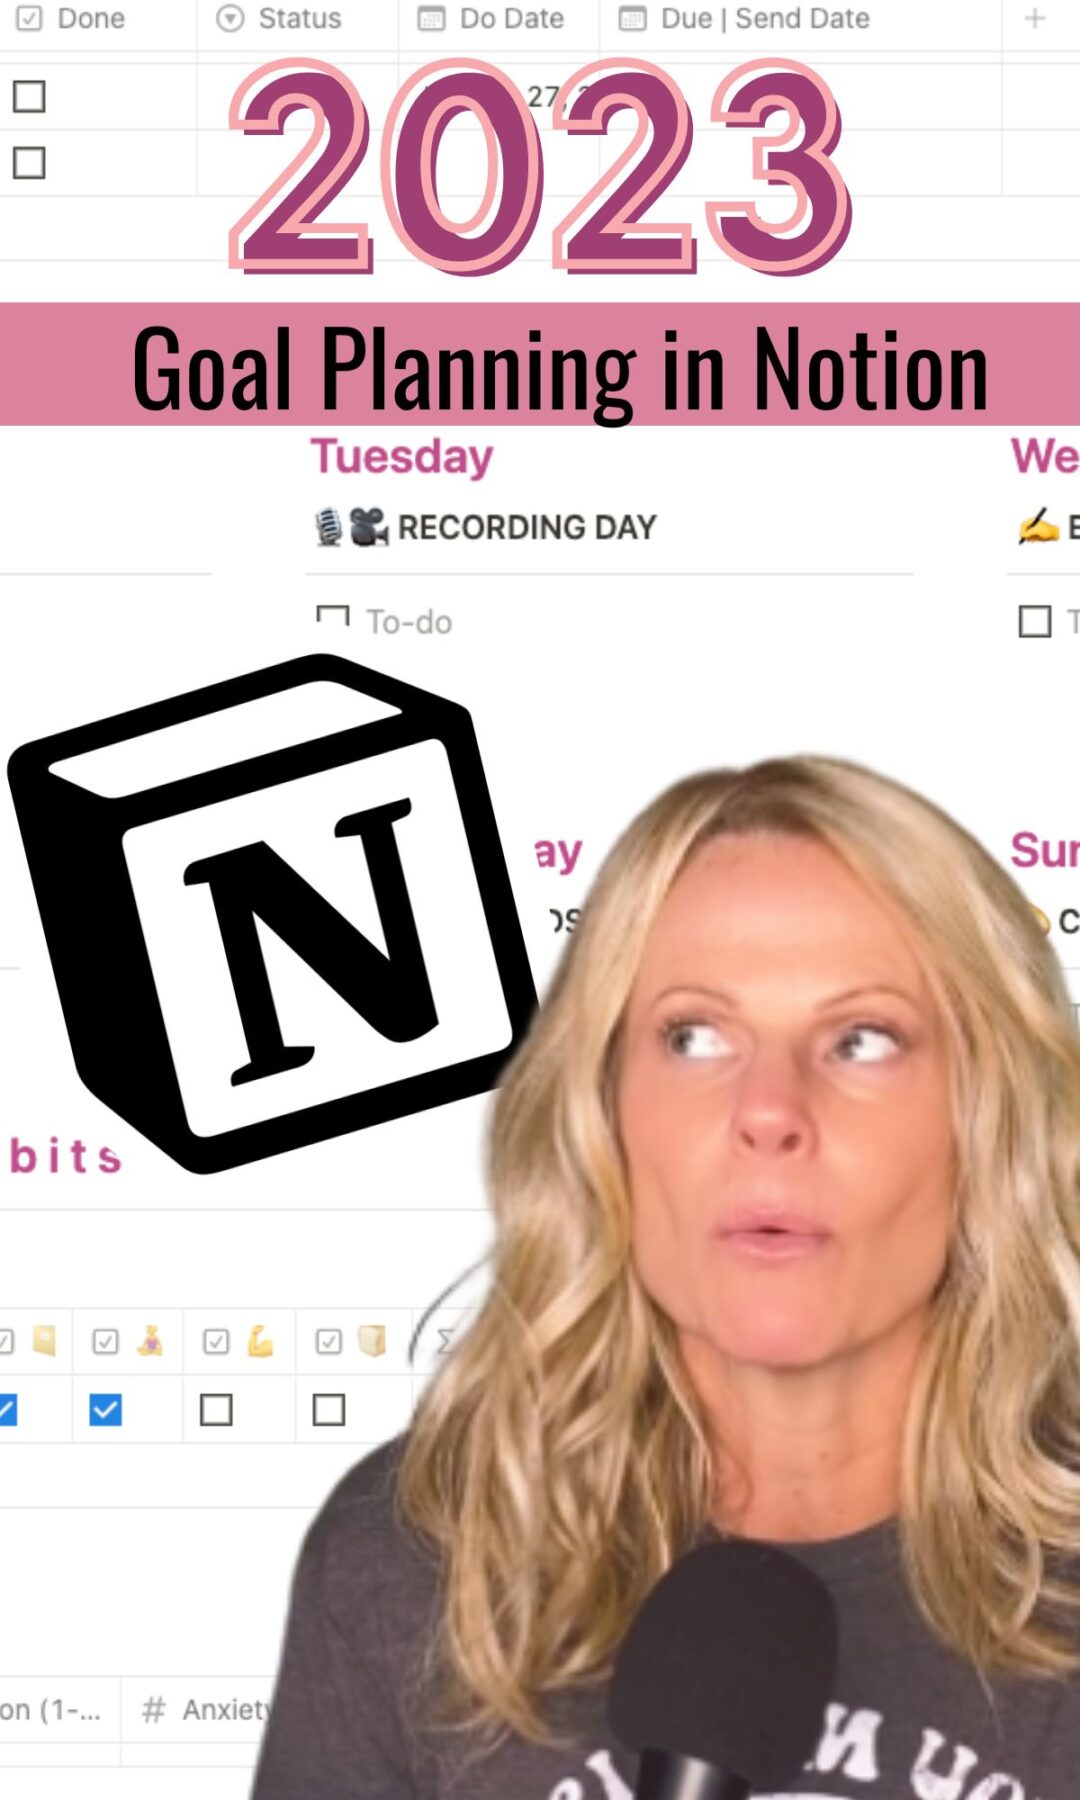 Goal planning notion